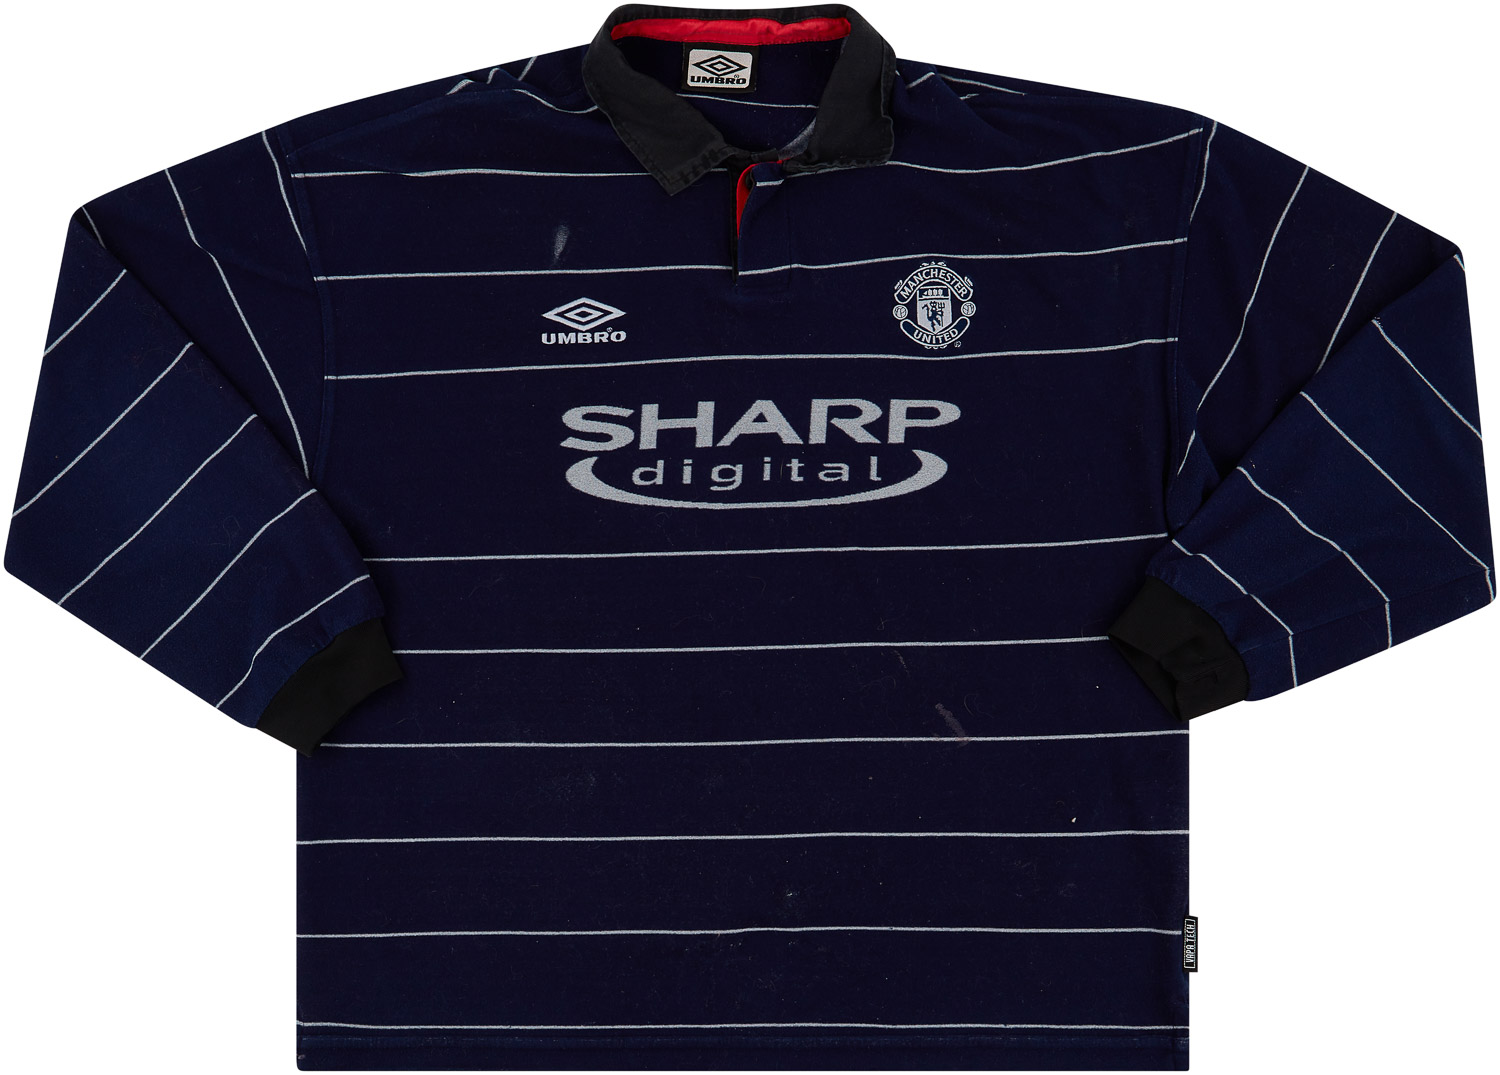 1999-00 Manchester United Away Shirt - 6/10 - ()